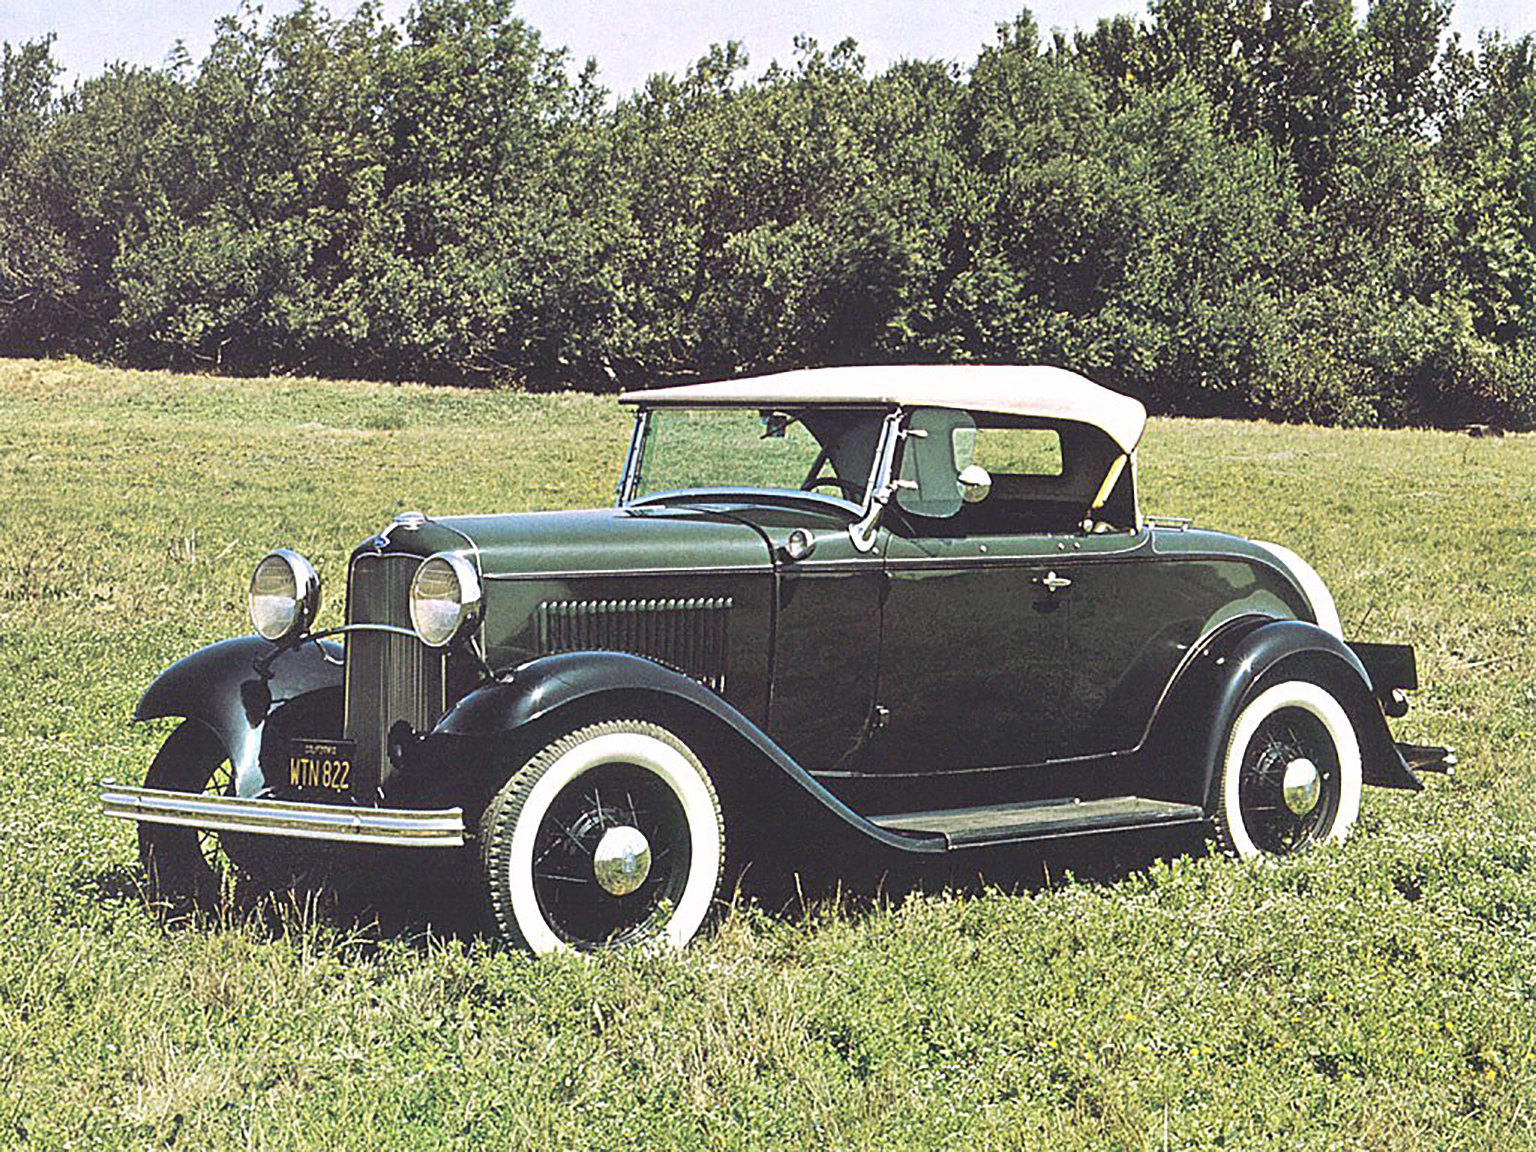 A 1932 Model B Ford. Photo courtesy of WheelsAge.org